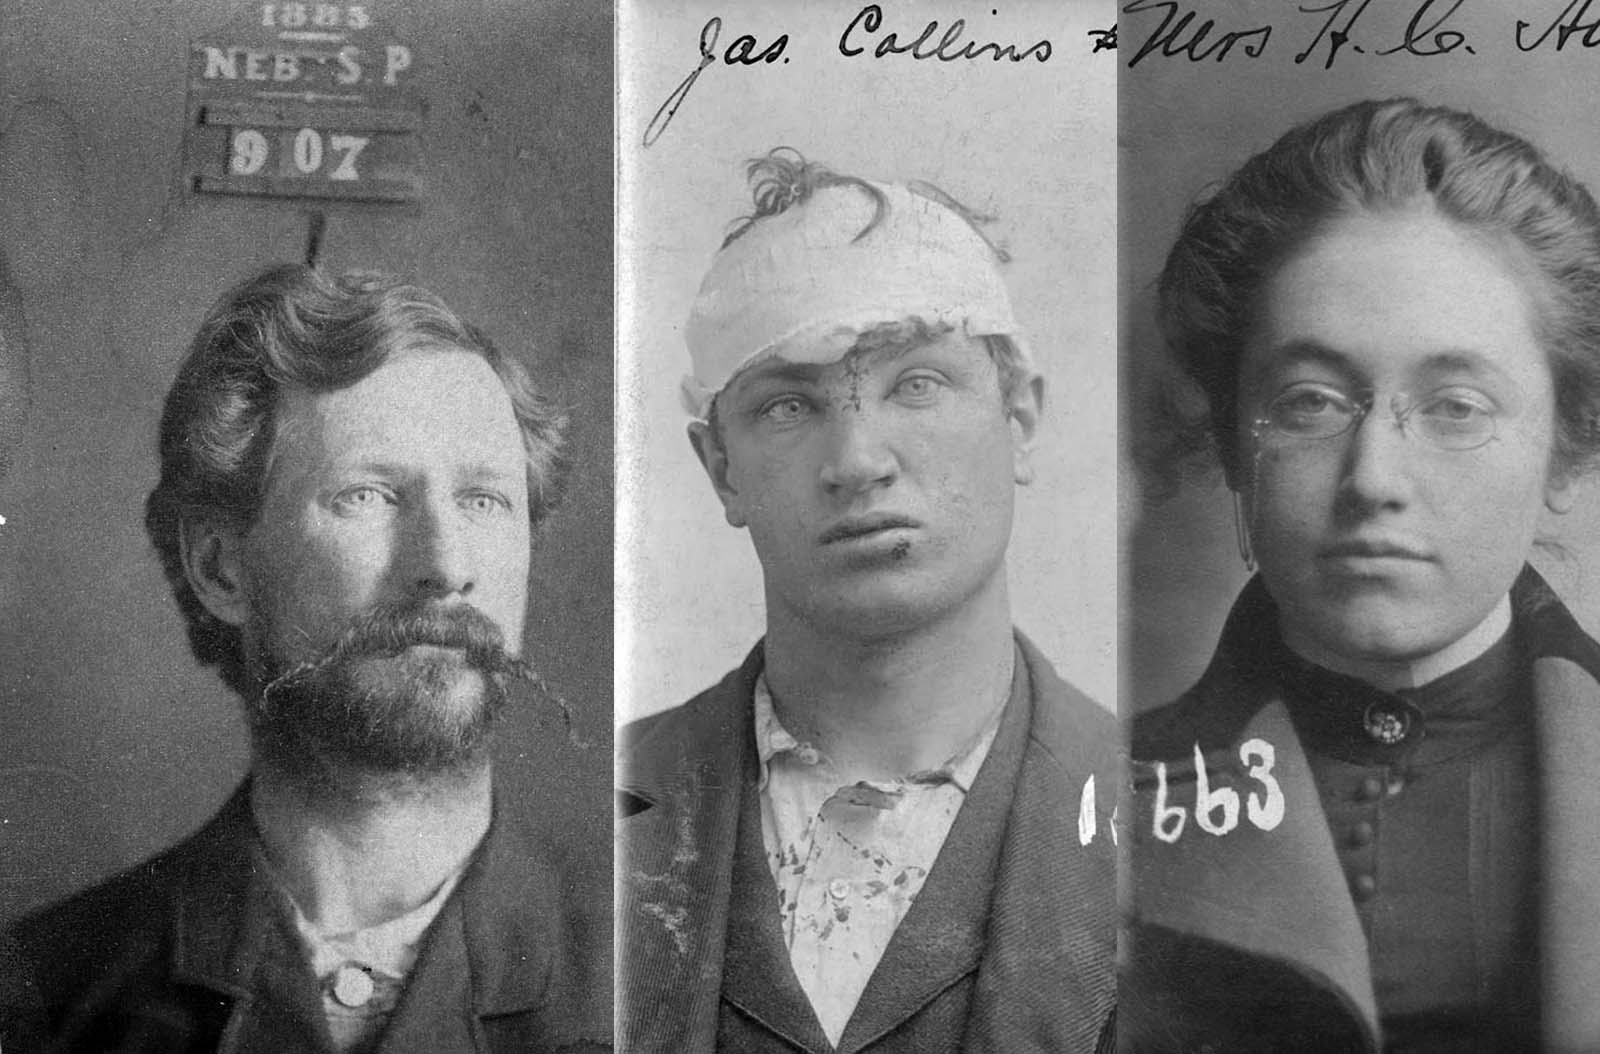 These historical mug shots reveal intriguing criminal stories, 1880-1930